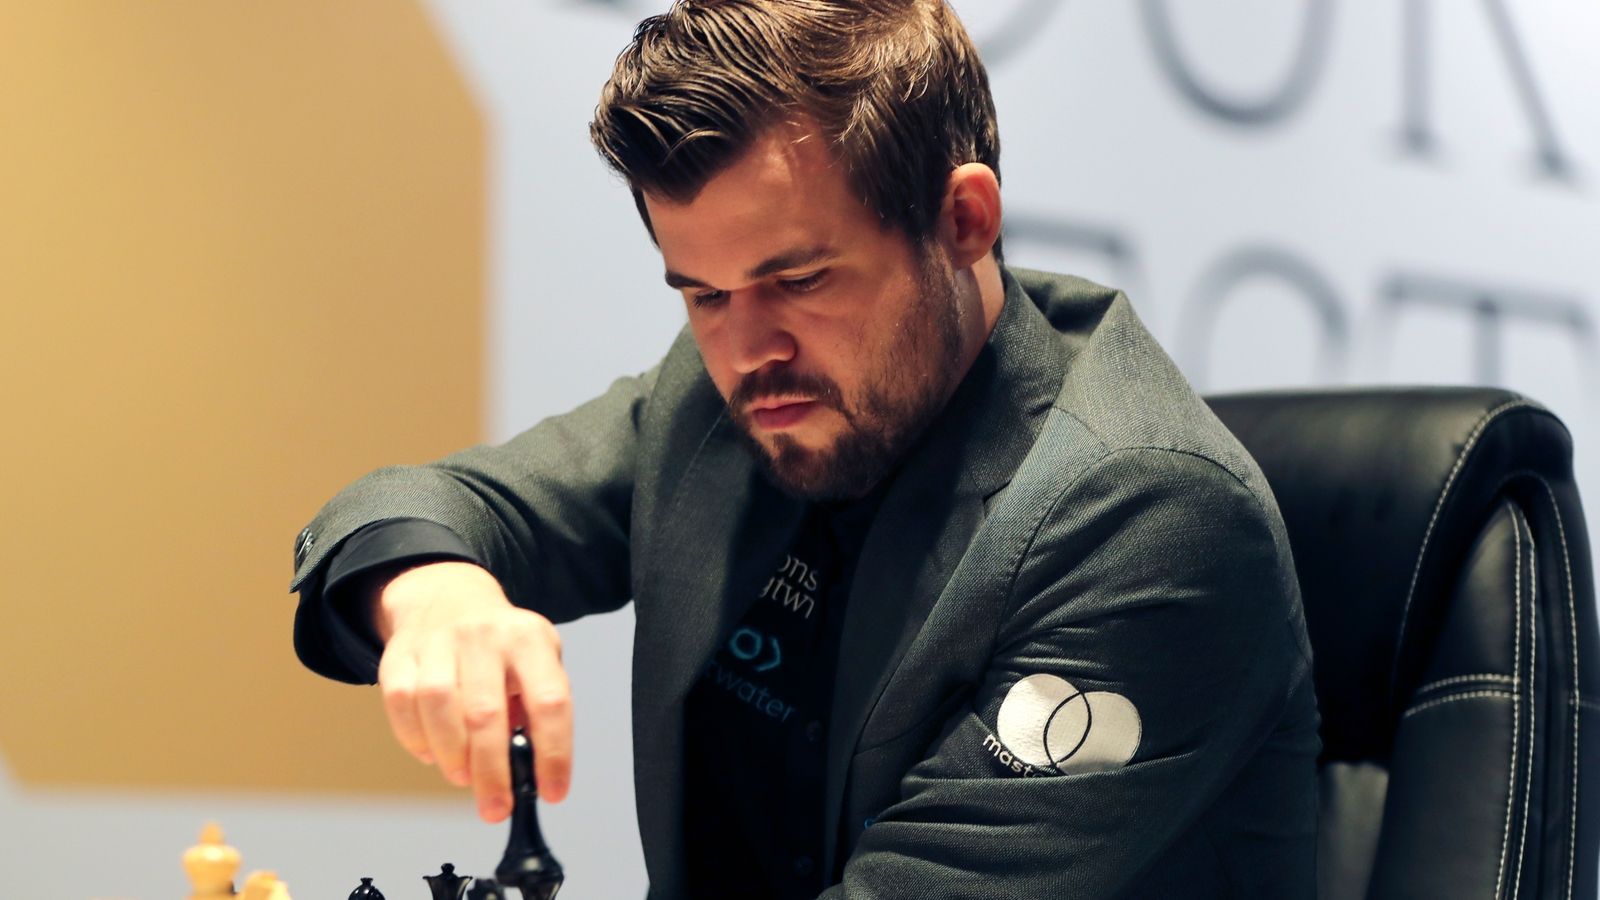 Magnus Carlsen Accuses Hans Niemann of Cheating at Chess, Sinquefield Cup